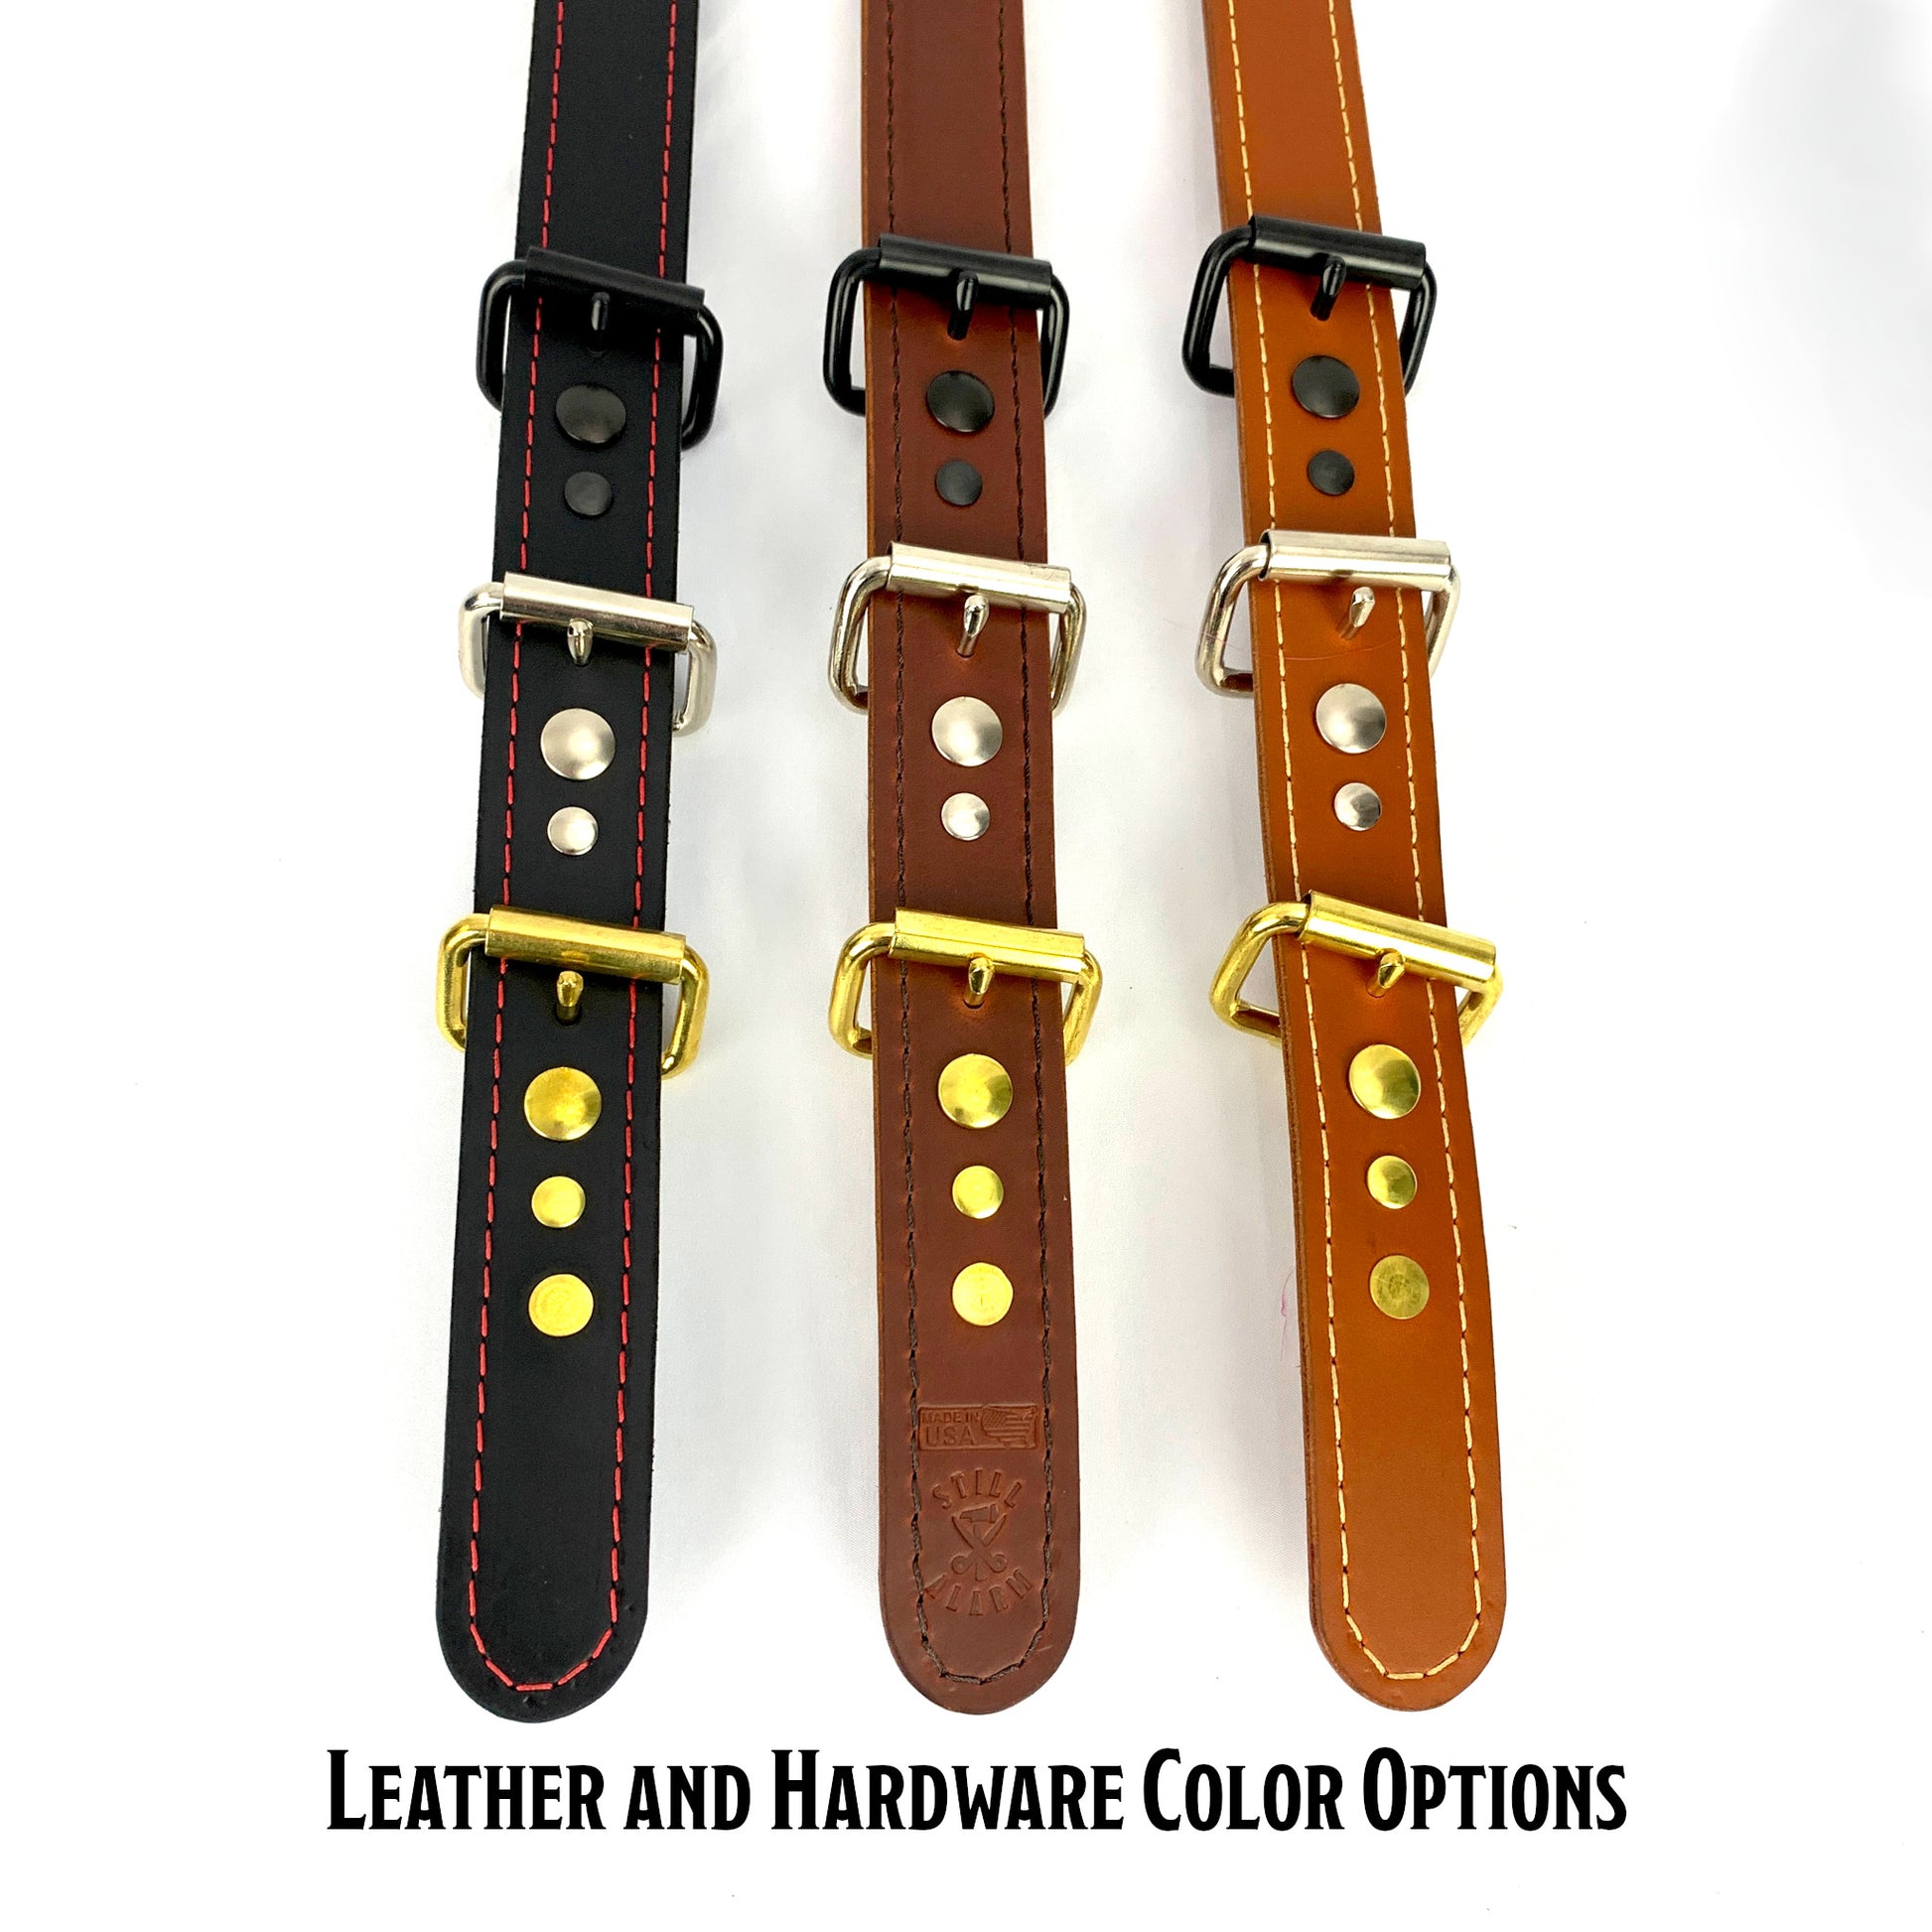 Custom Leather Colors